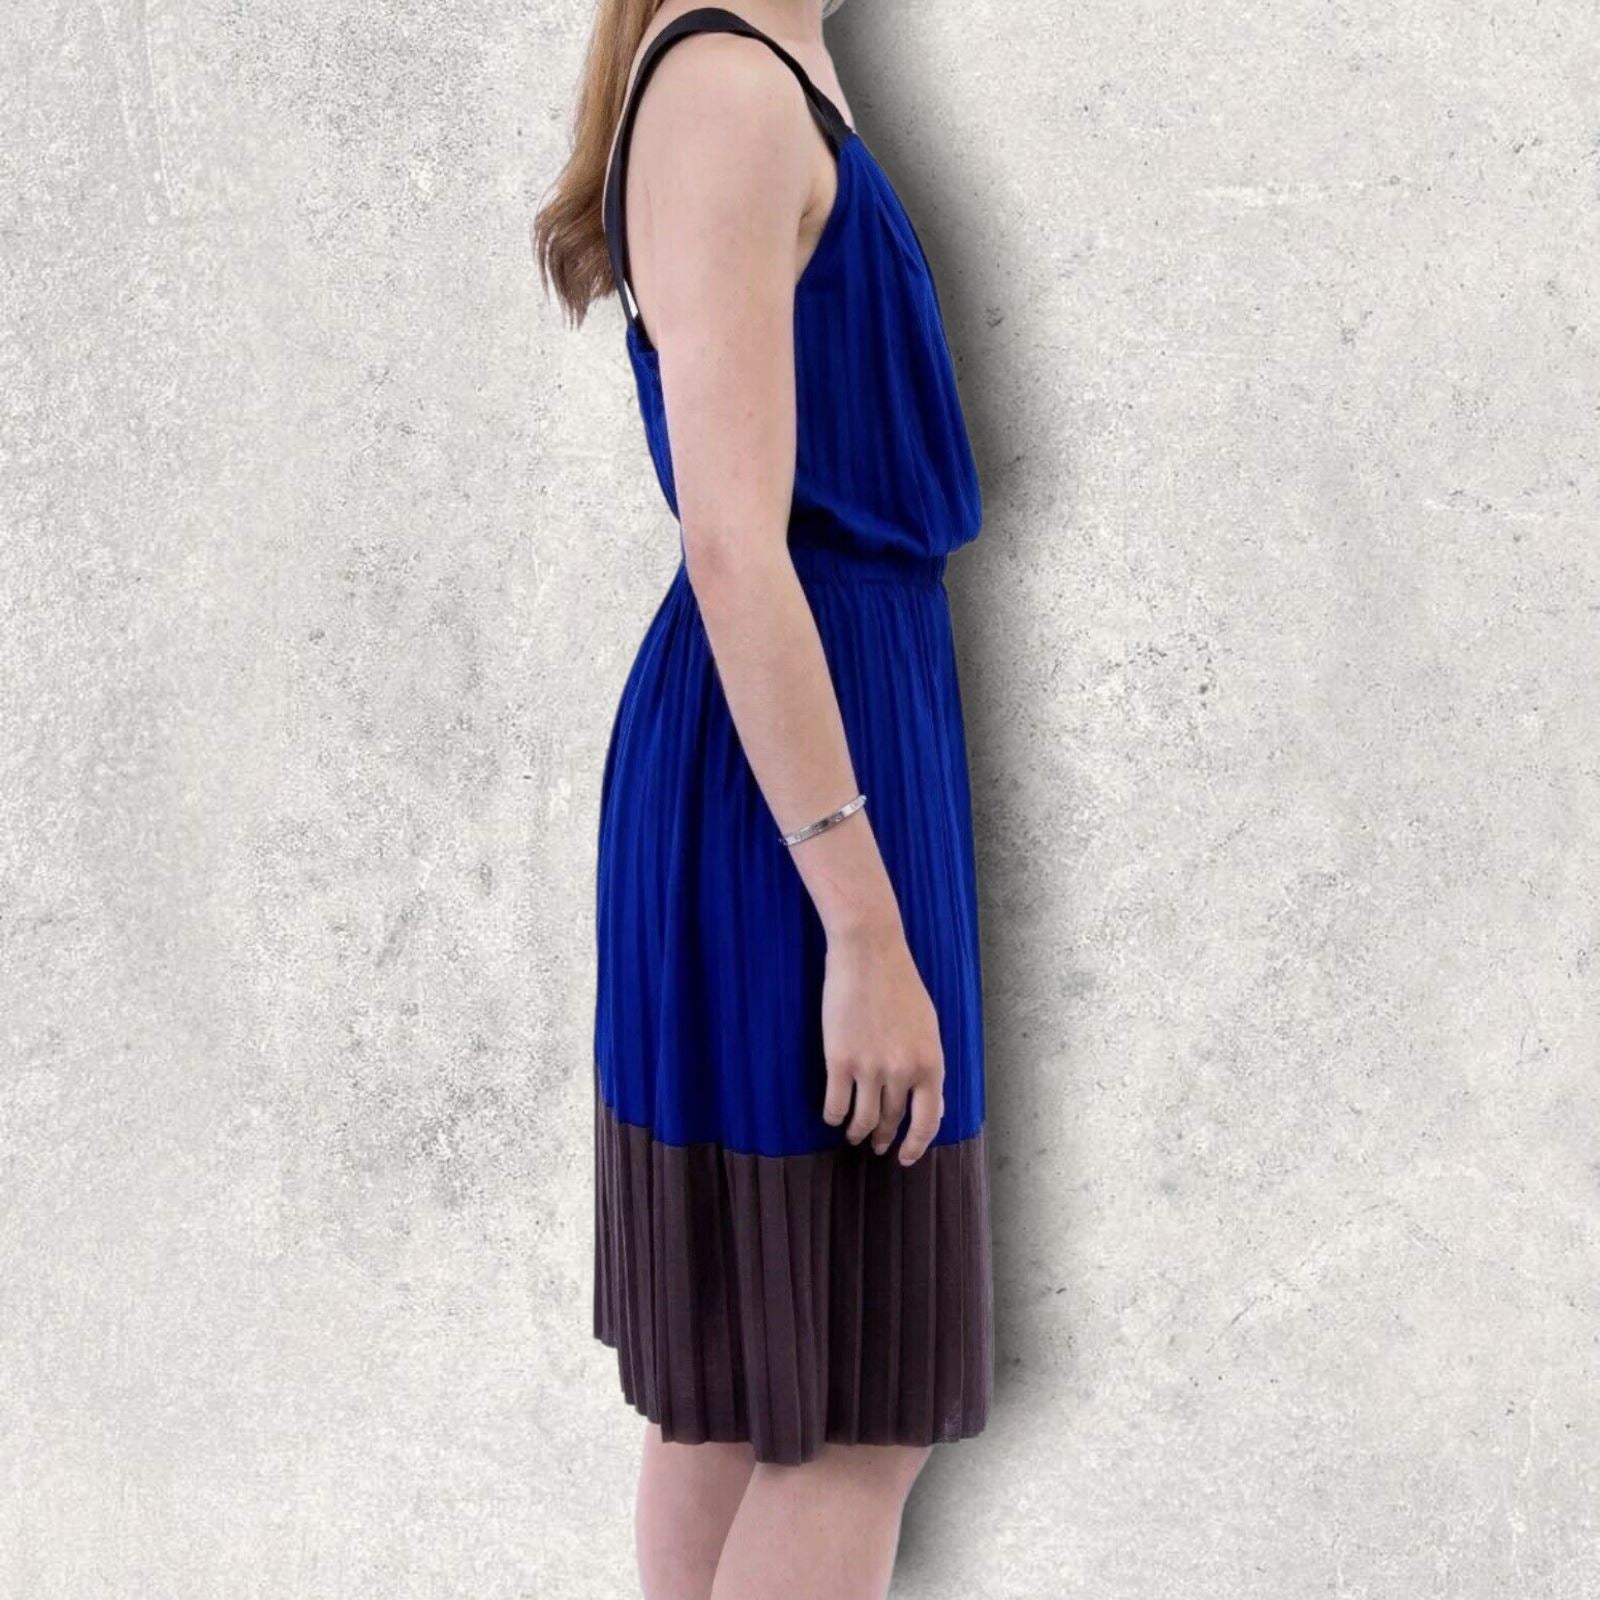 Hoss Intropia Blue & Brown Colour Block Pleated Sundress Size S UK 10 US 6 EU 38 Timeless Fashions